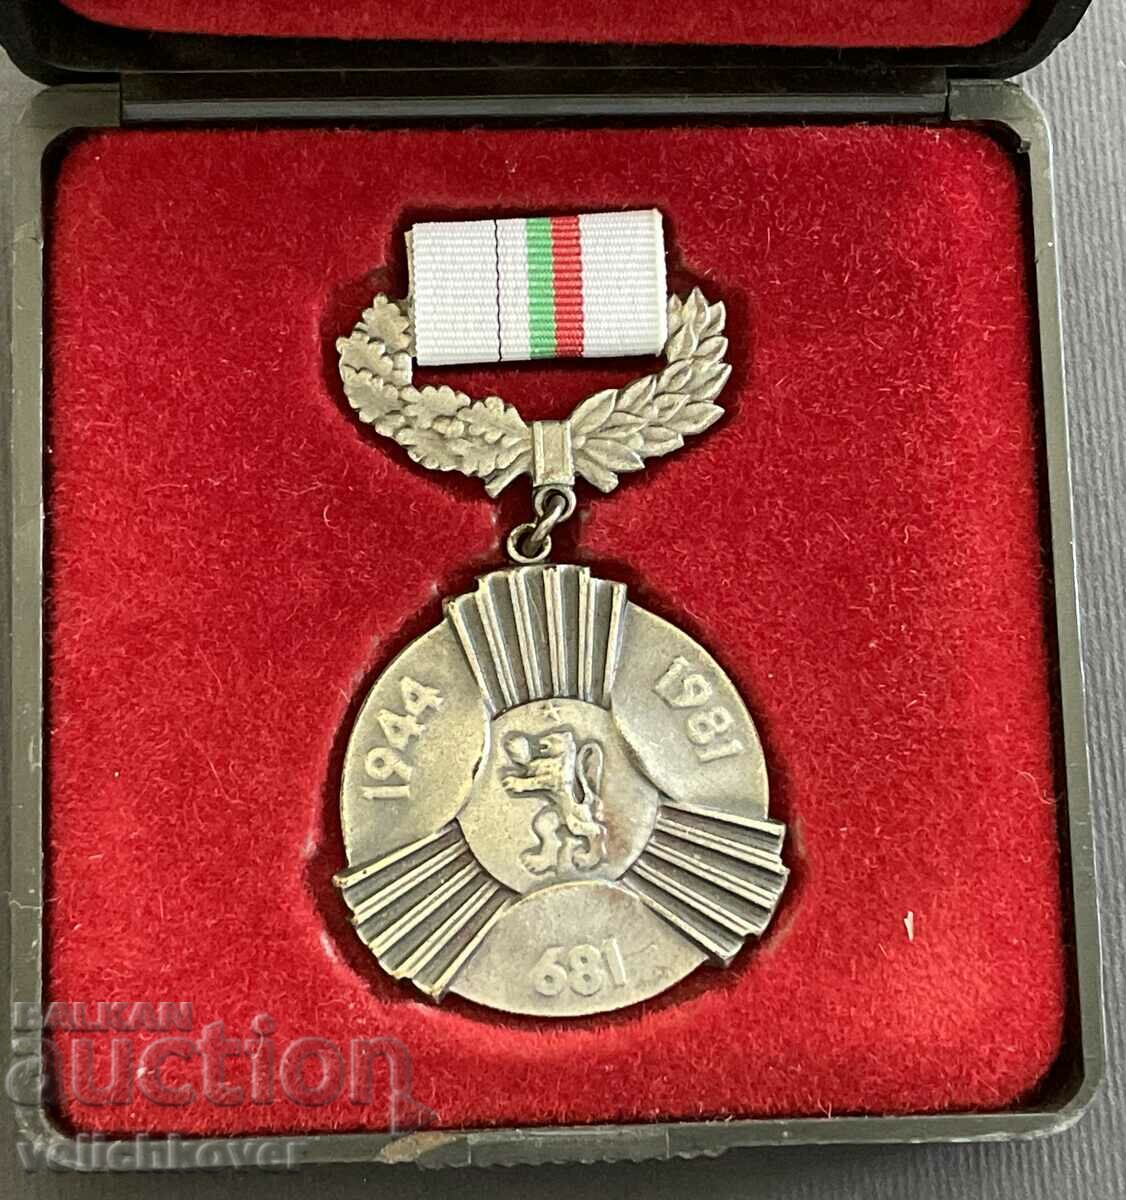 36987 България медал 1300г. Години България 681-1981г.